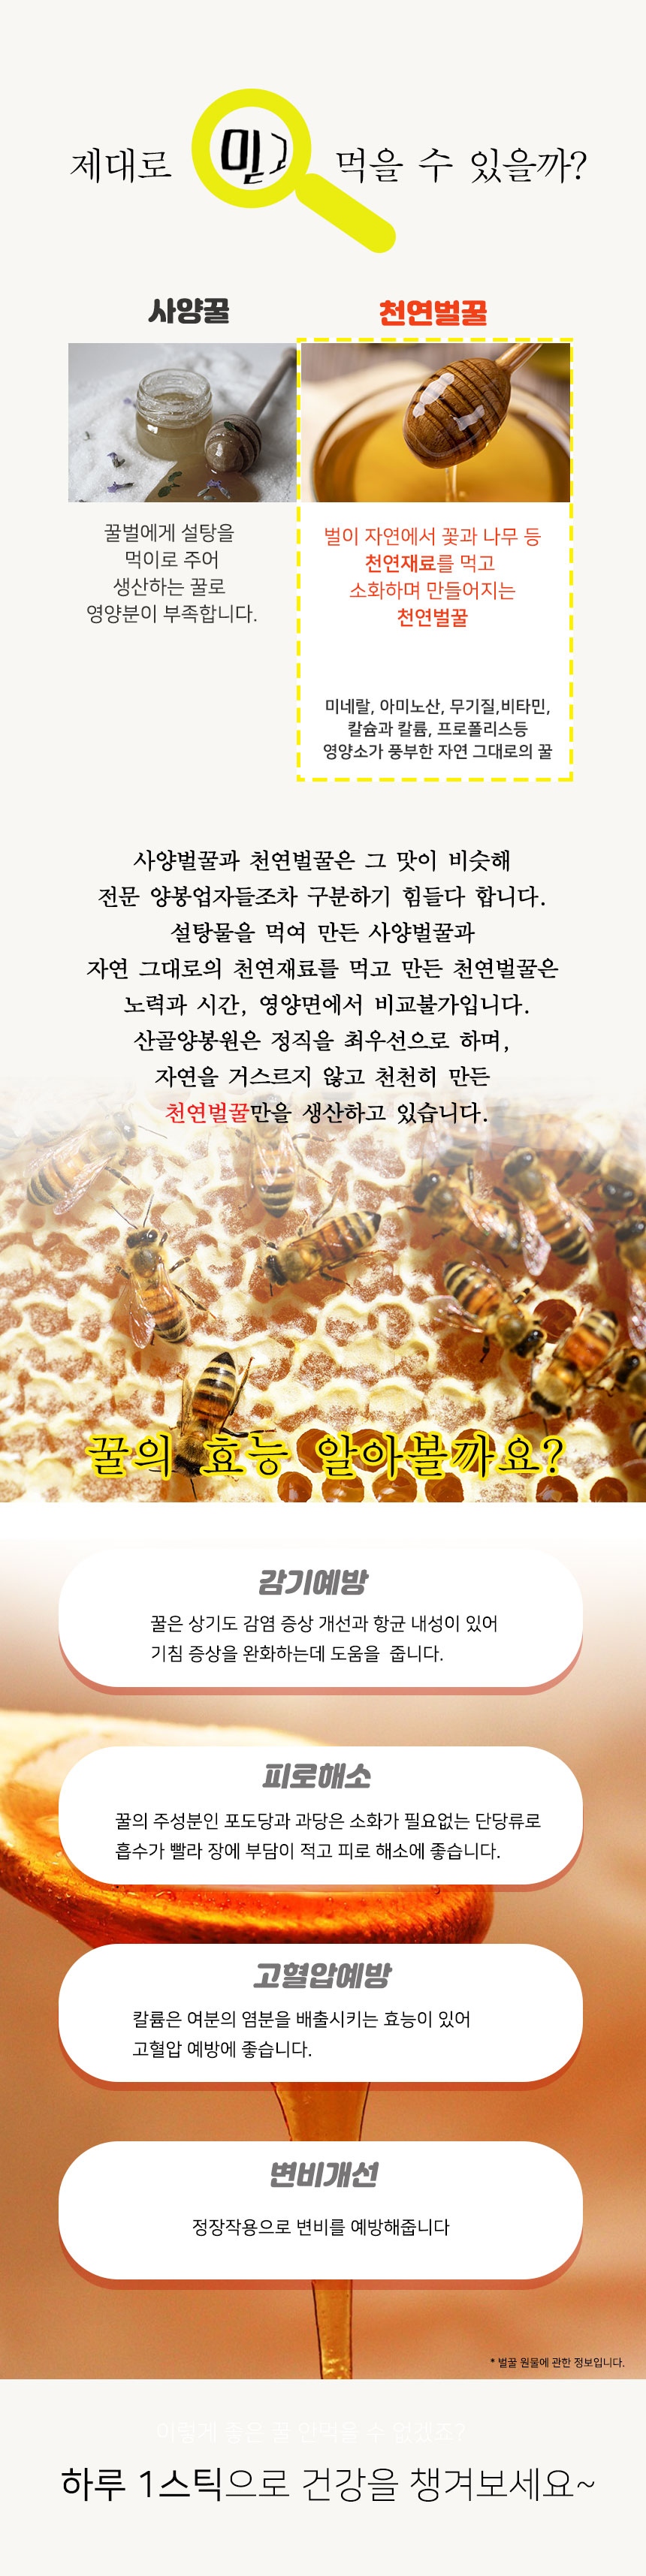 honeystick05-1.jpg